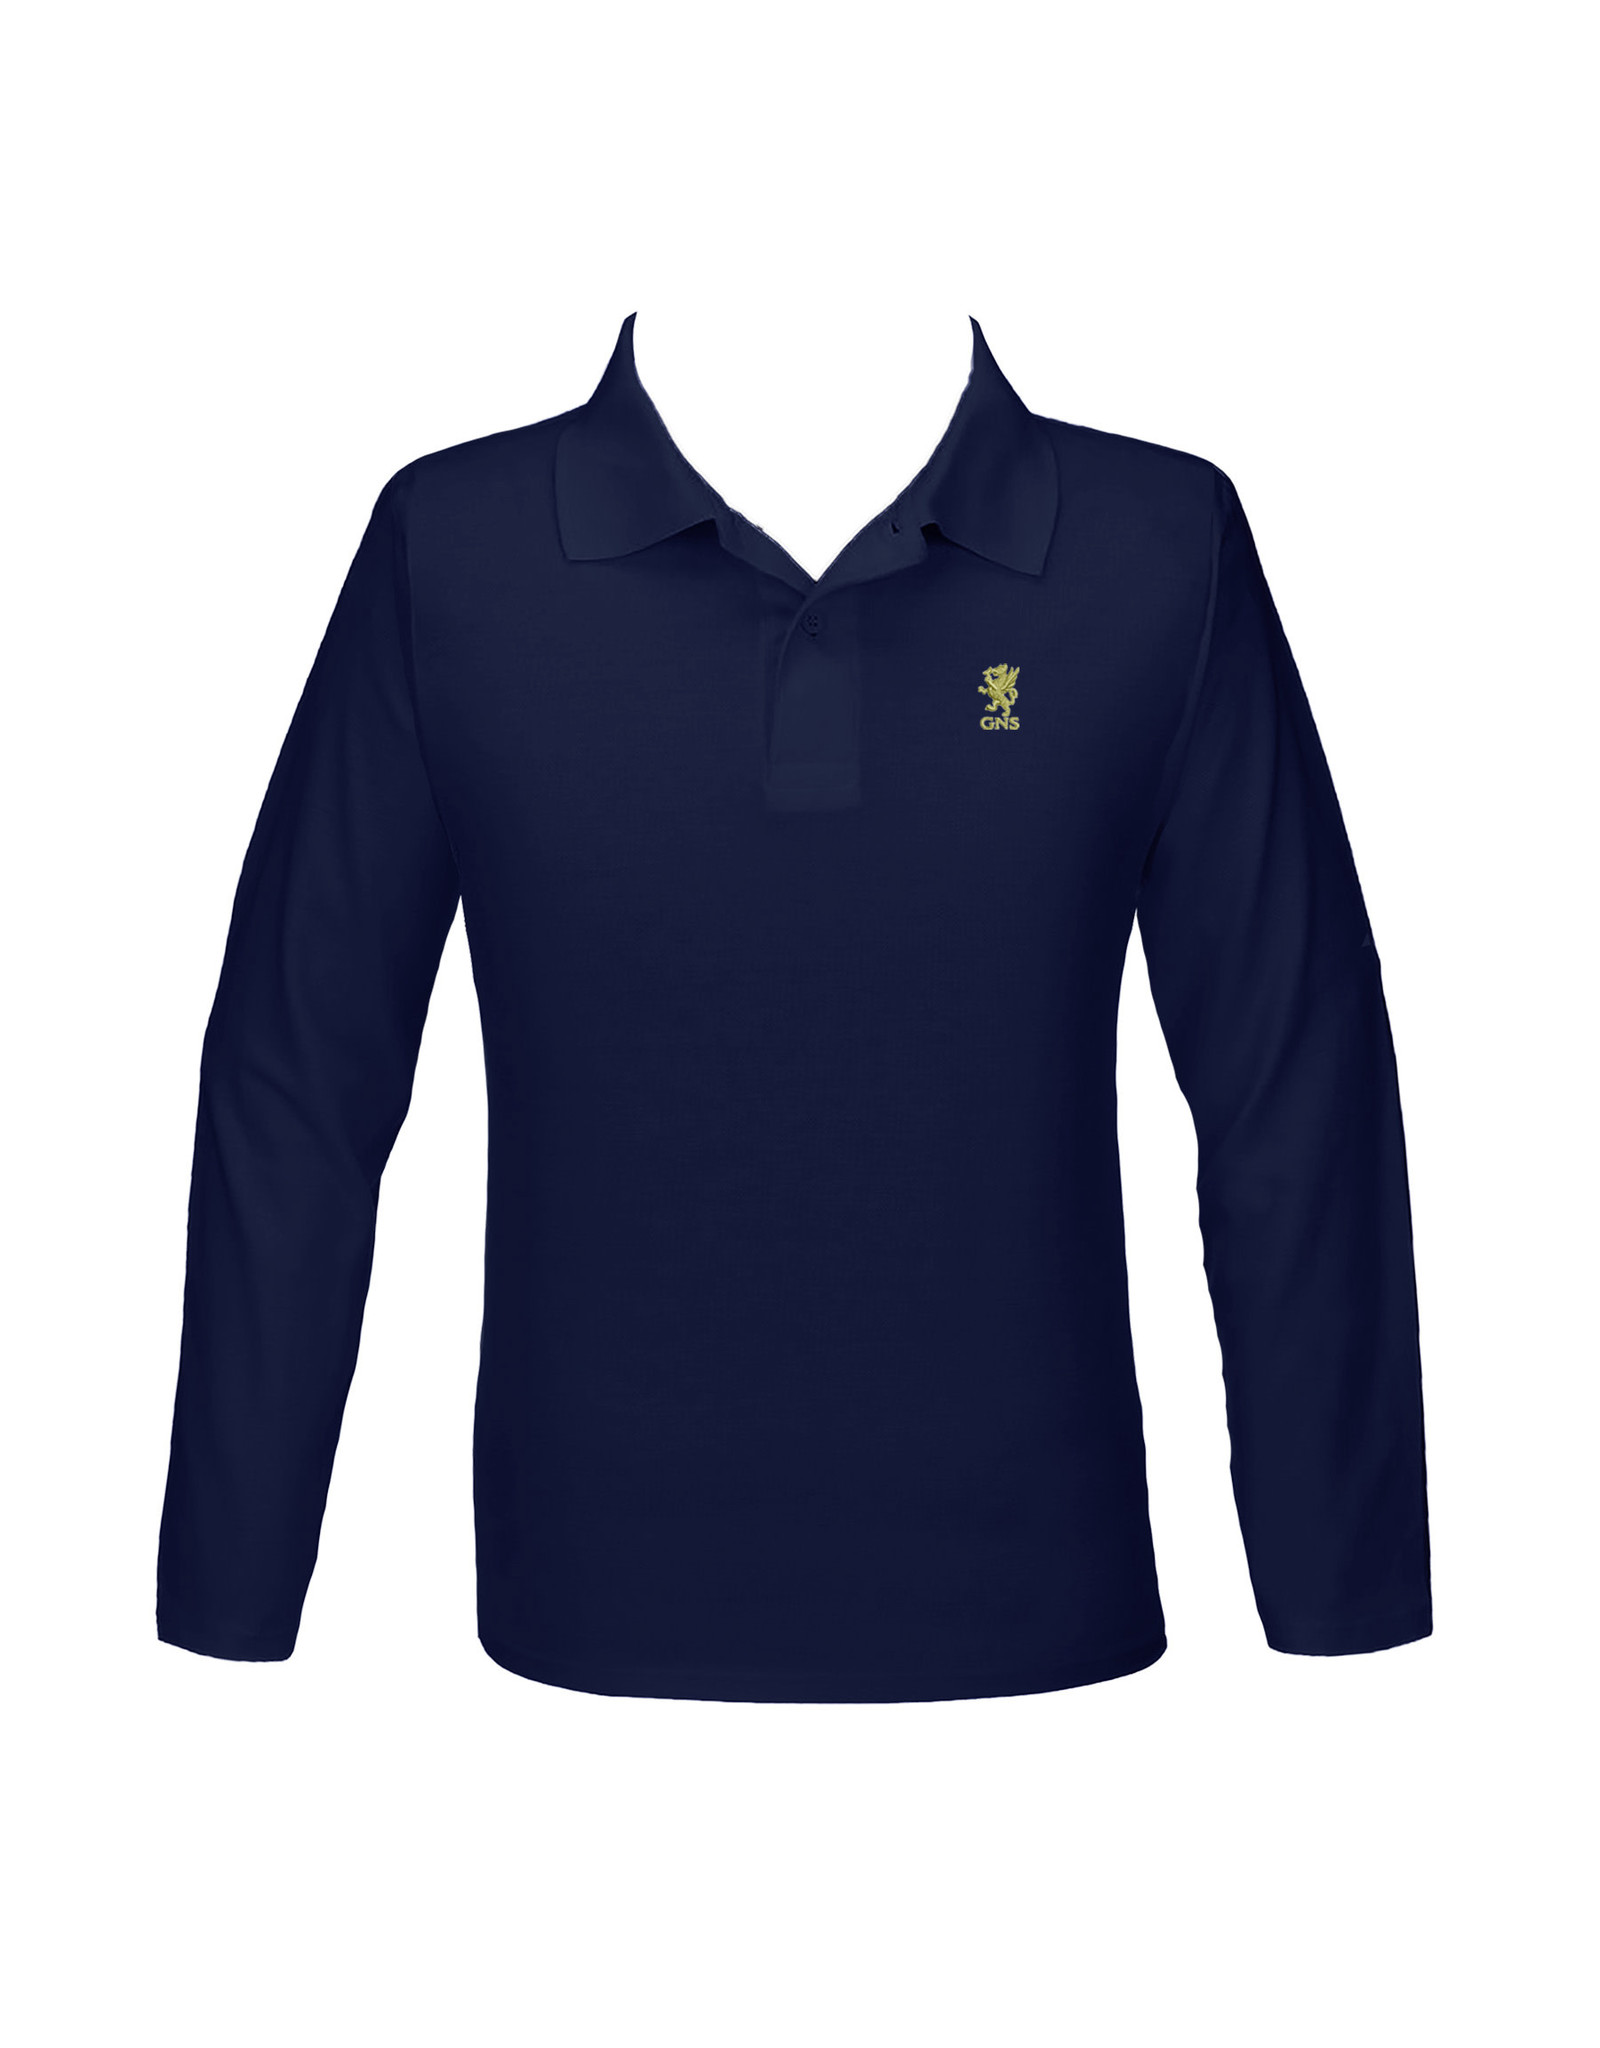 Cambridge Golf Shirt, Long Sleeve - Navy - Youth/Unisex